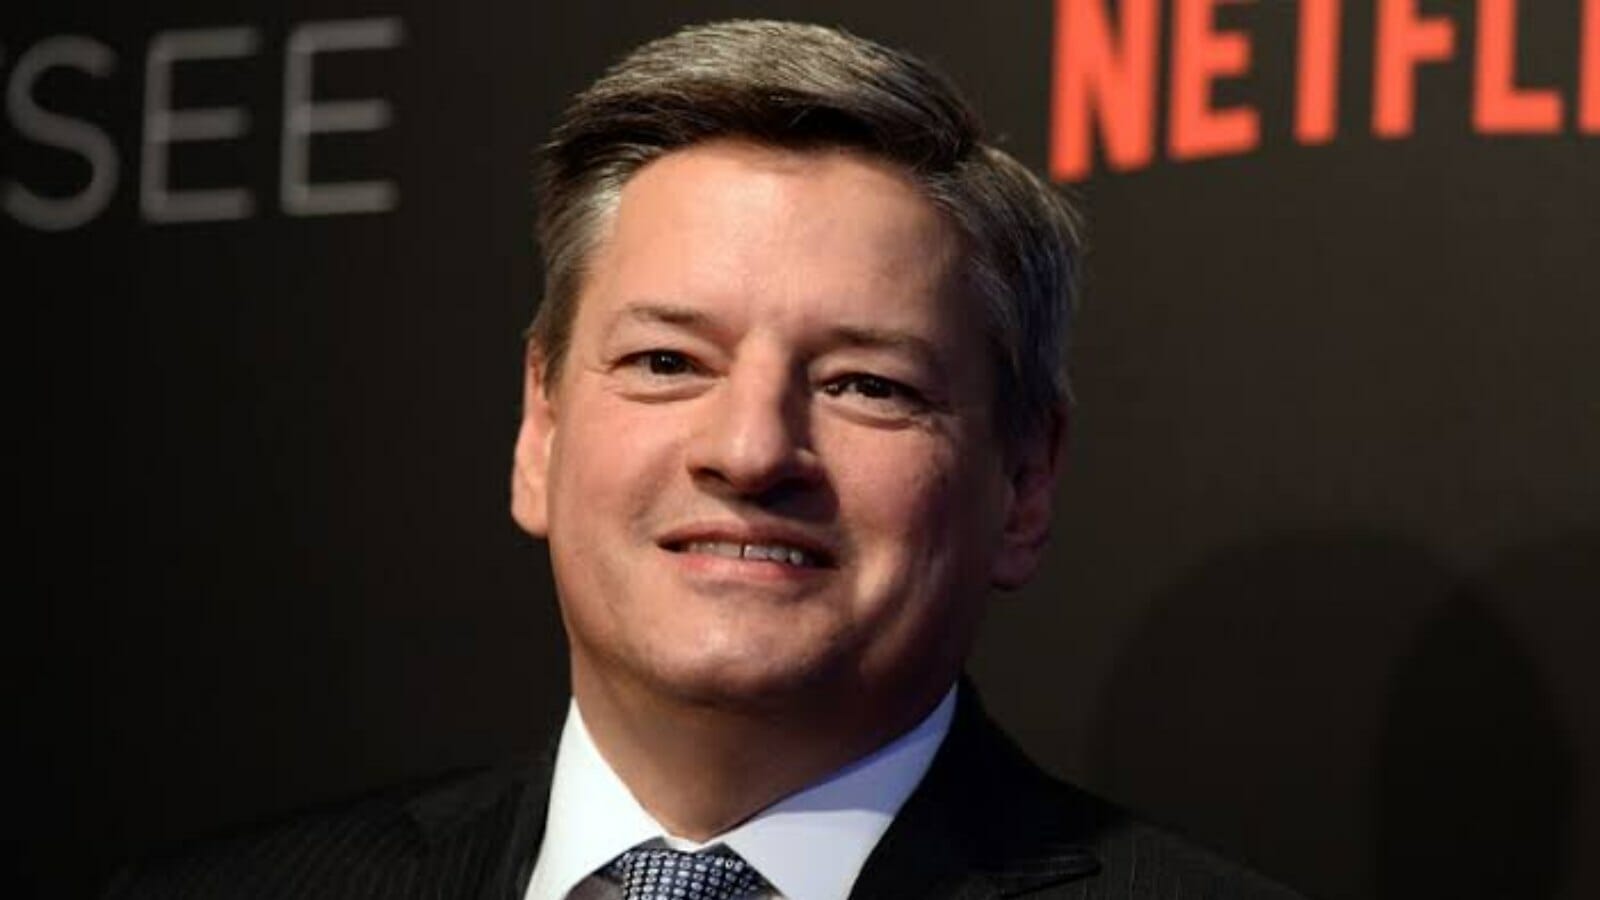 Ted Sarandos, CEO of the Netflix